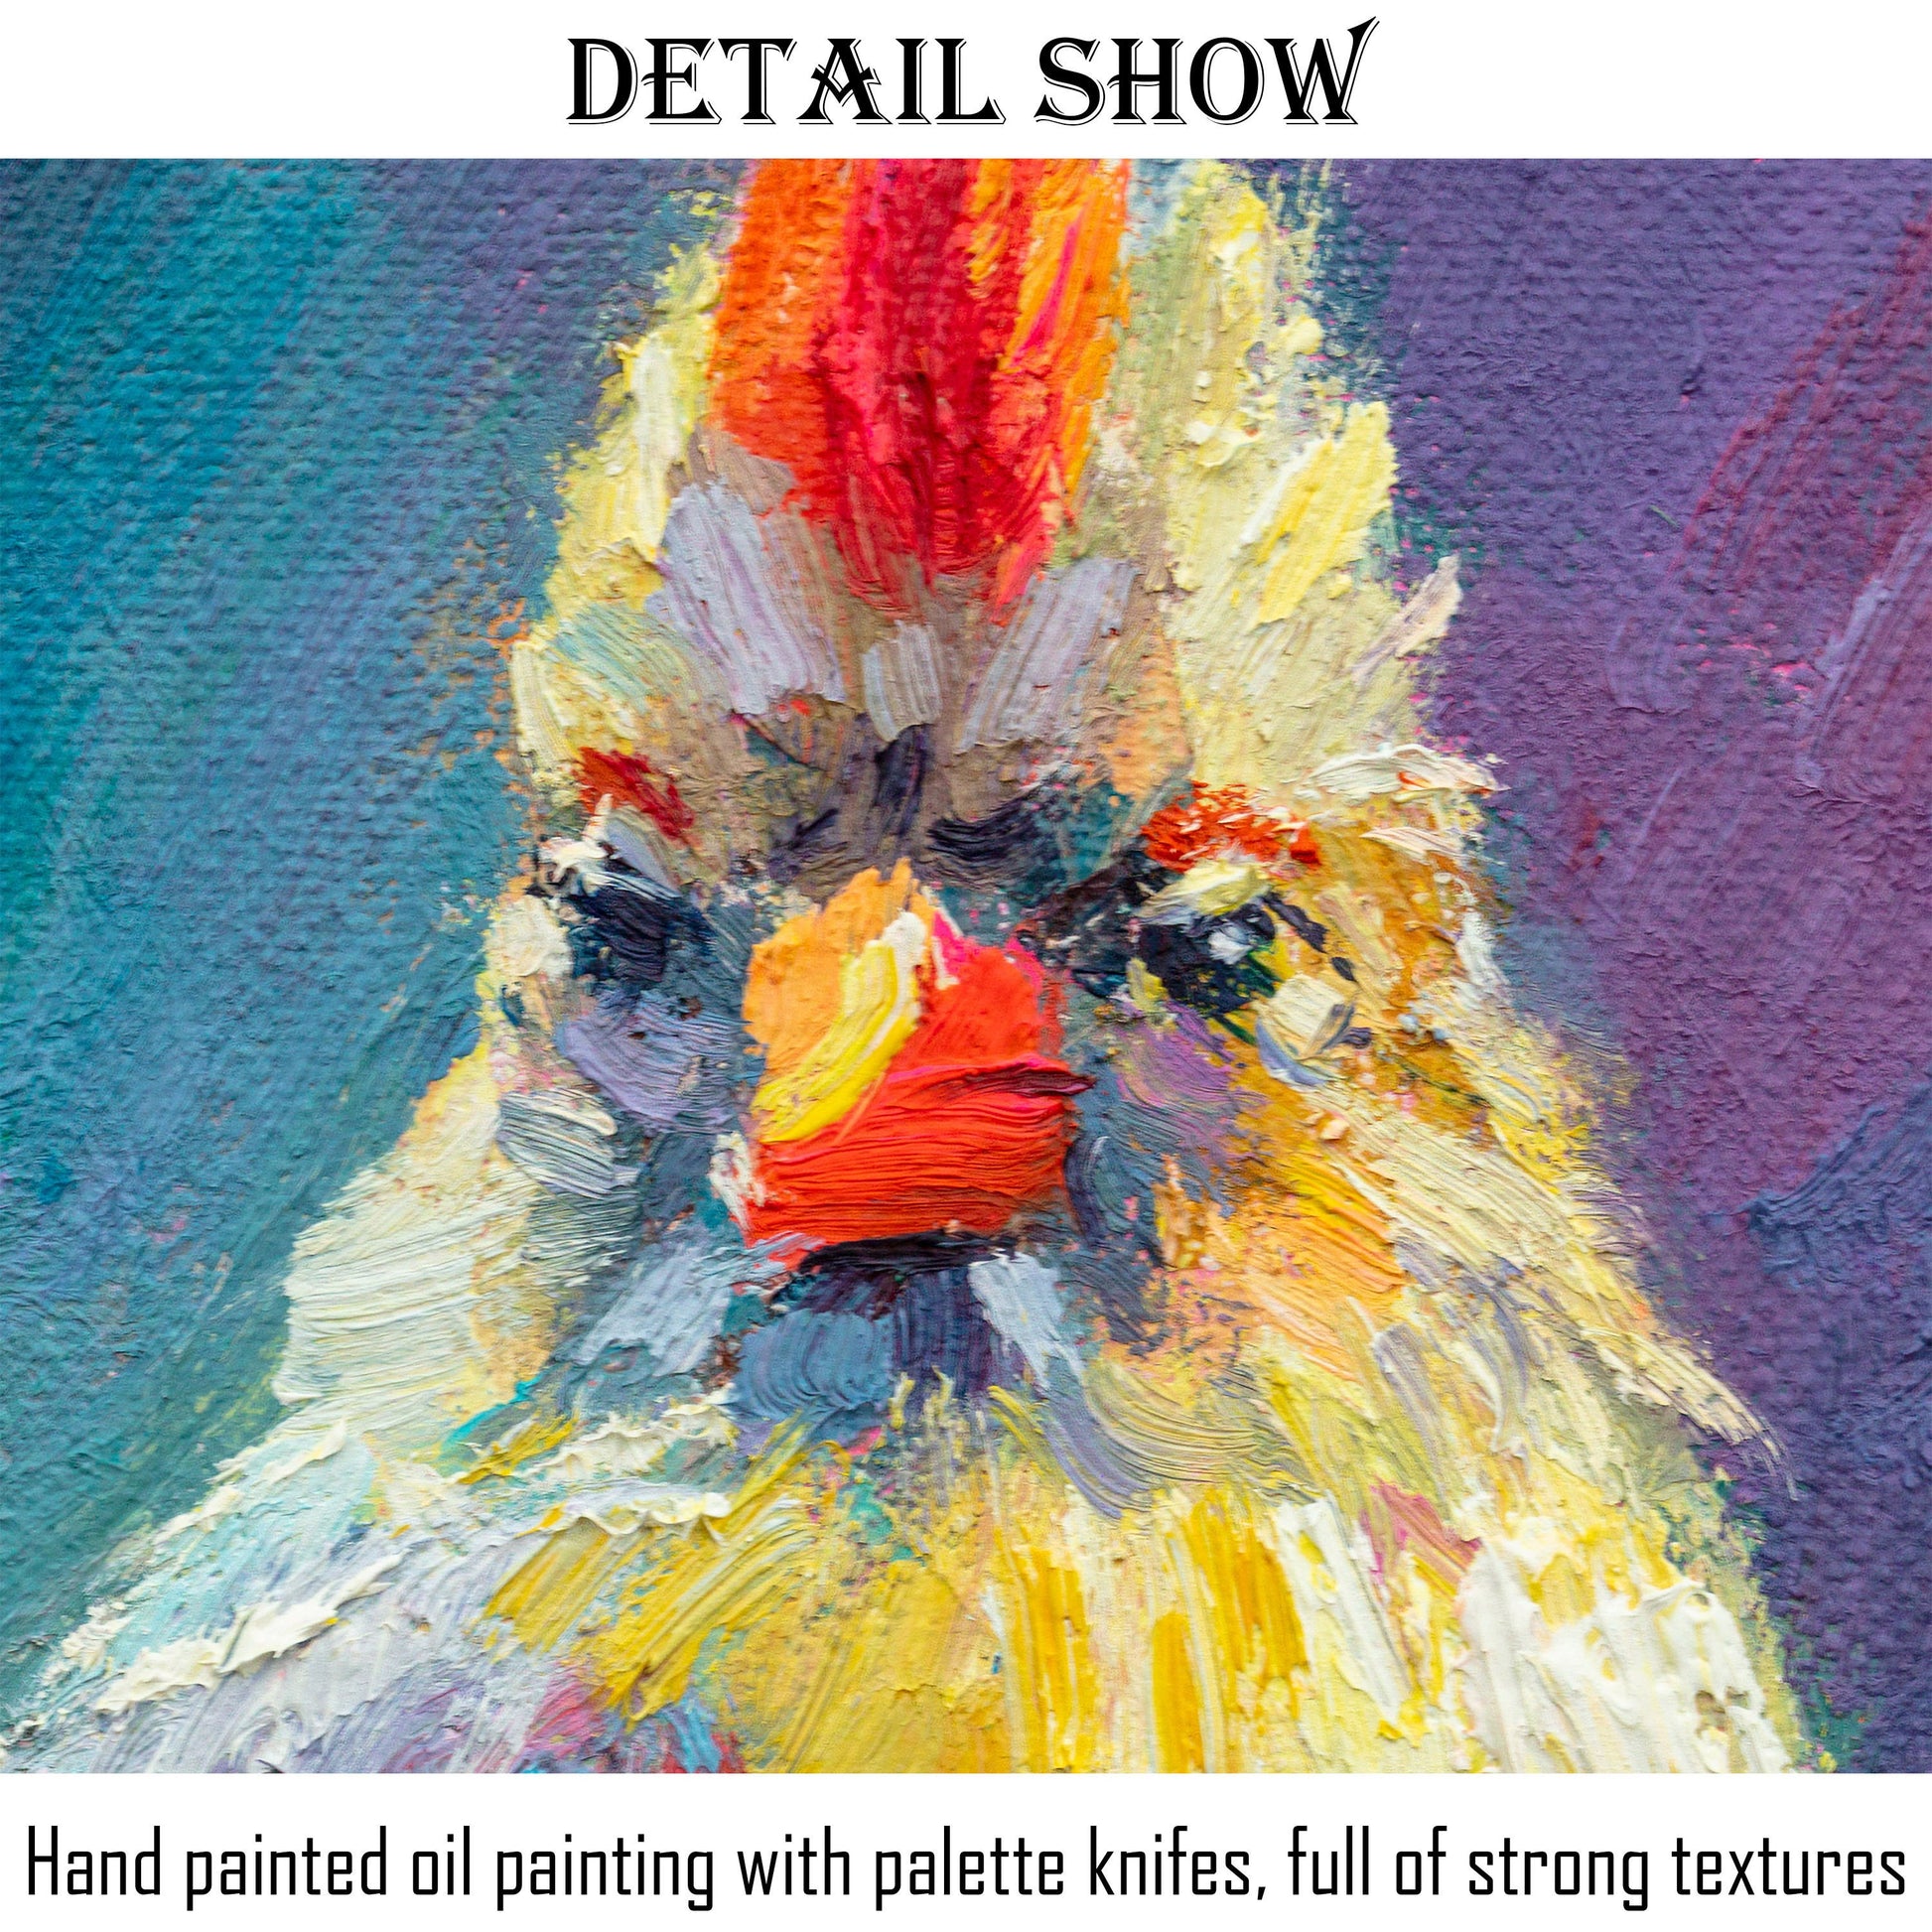 Oil Painting Bird, Northern Cardinal Female, Canvas Painting, Abstract Oil Painting, Kitchen Decor, Bird Painting, Modern Art, Original Art